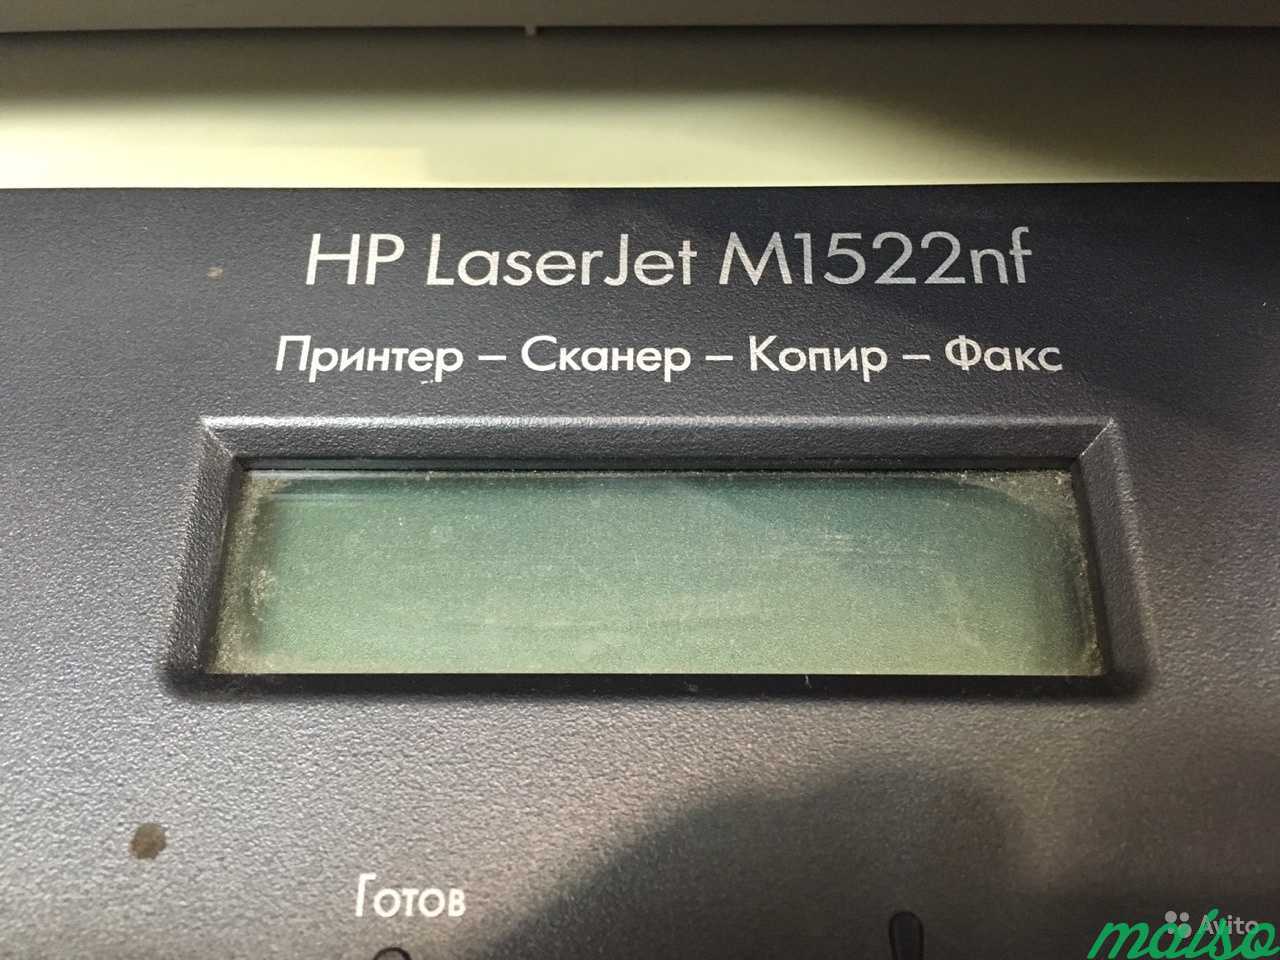 Принтер сканер факс копир мфу hp LaserJet m1522nf в Санкт-Петербурге. Фото 1